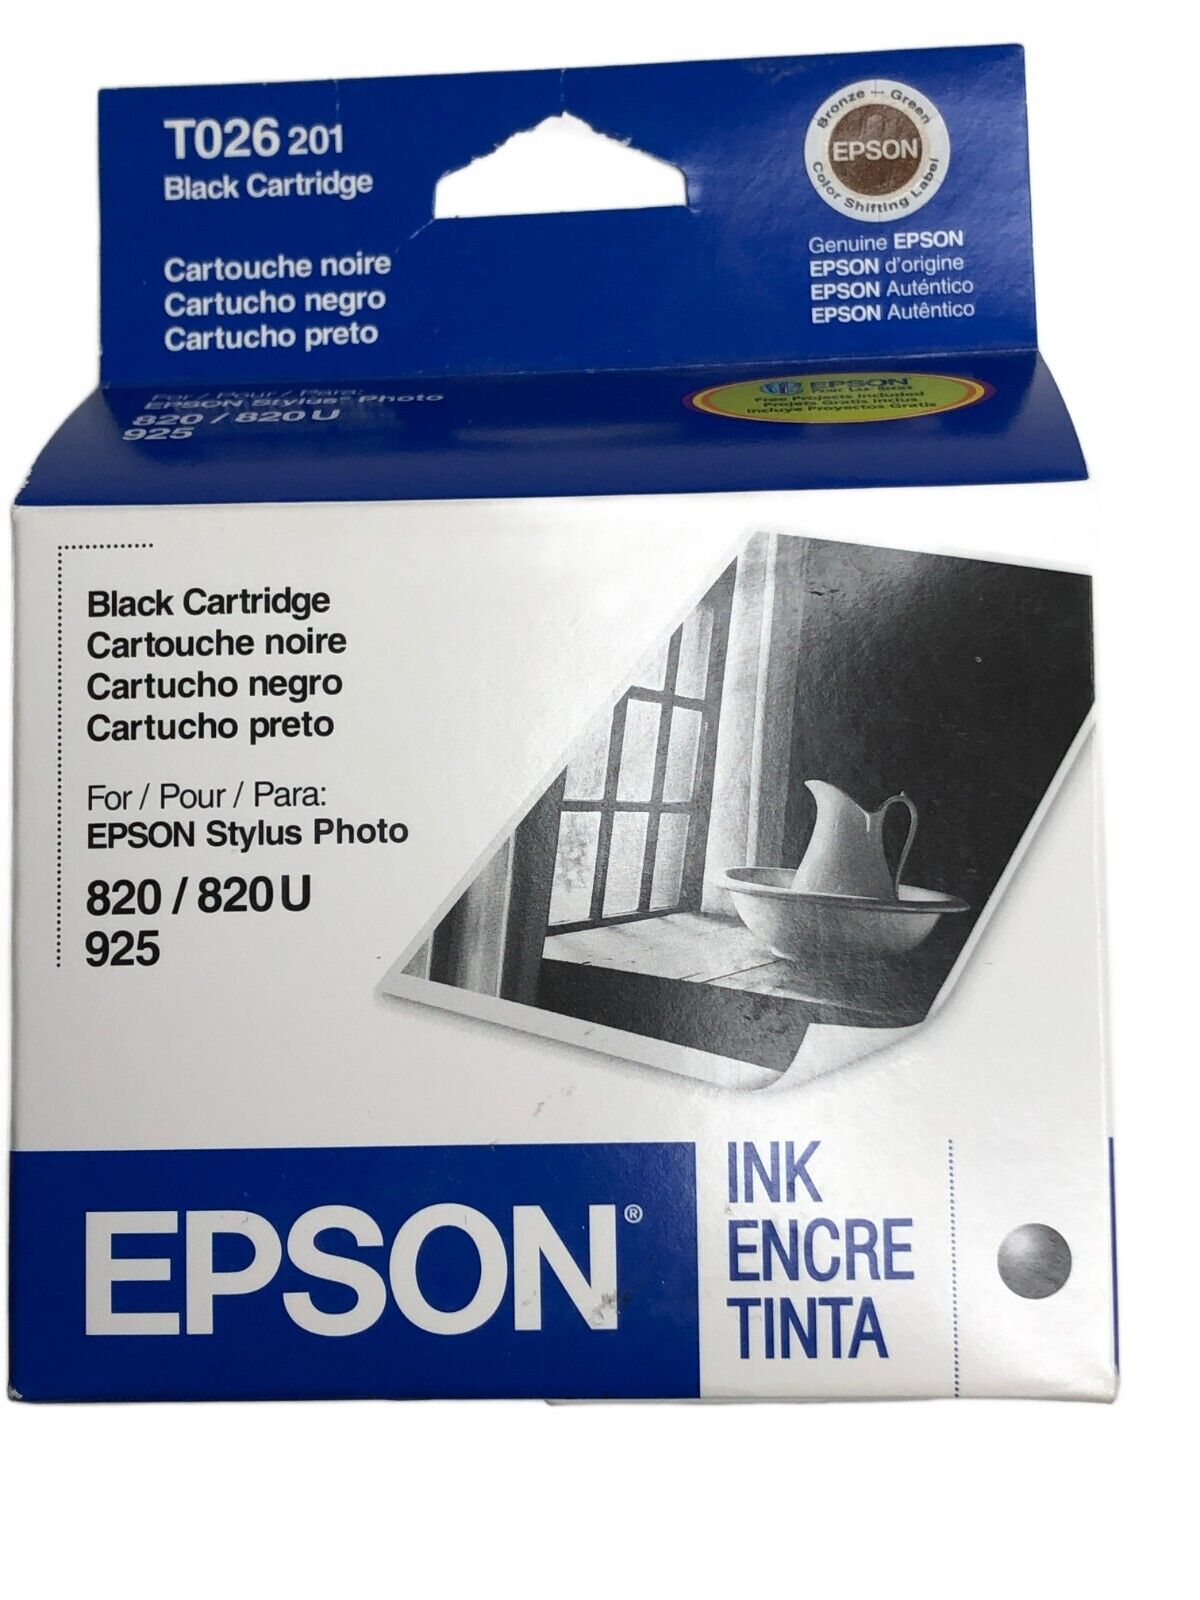 Epson T026 201 Black Cartridge for Epson Stylus Photo 820/ 820U/ 925 exp 11/05